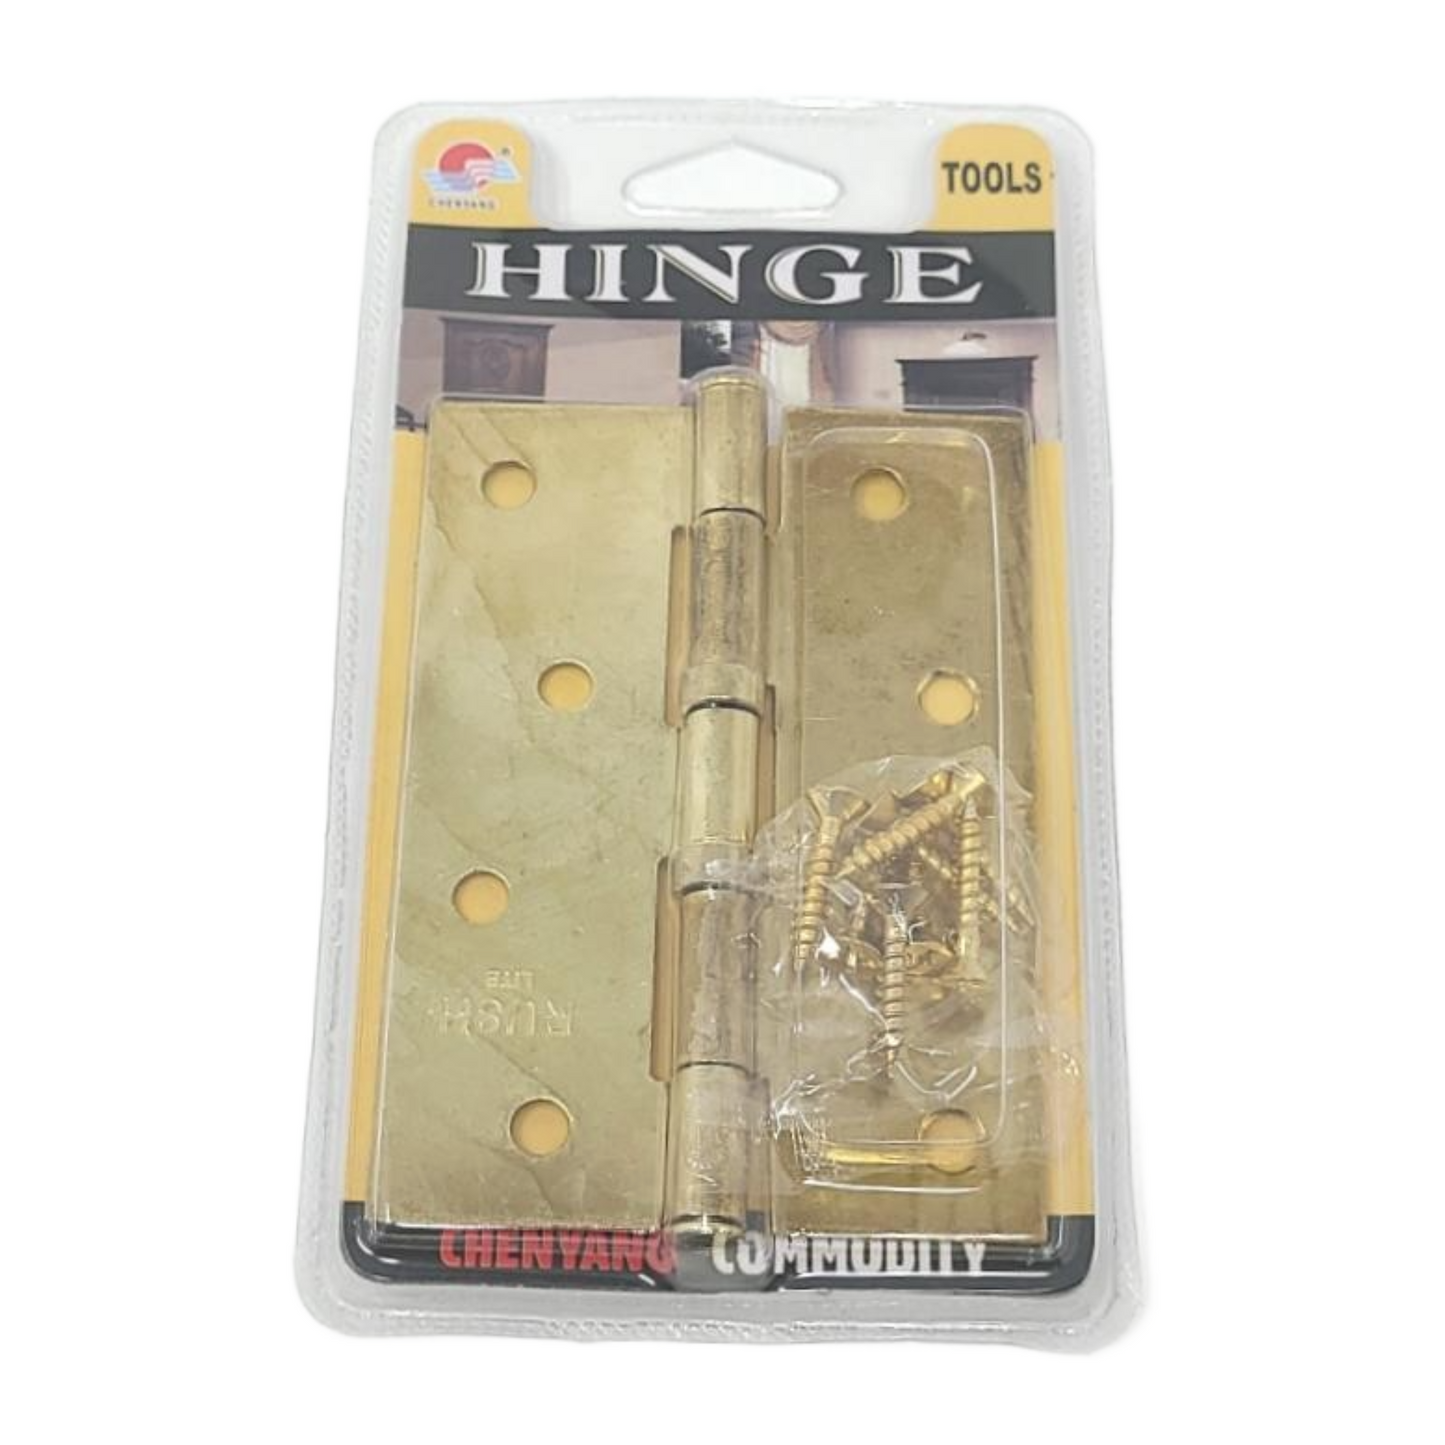 Hinge, 4" (1 unit/pack)